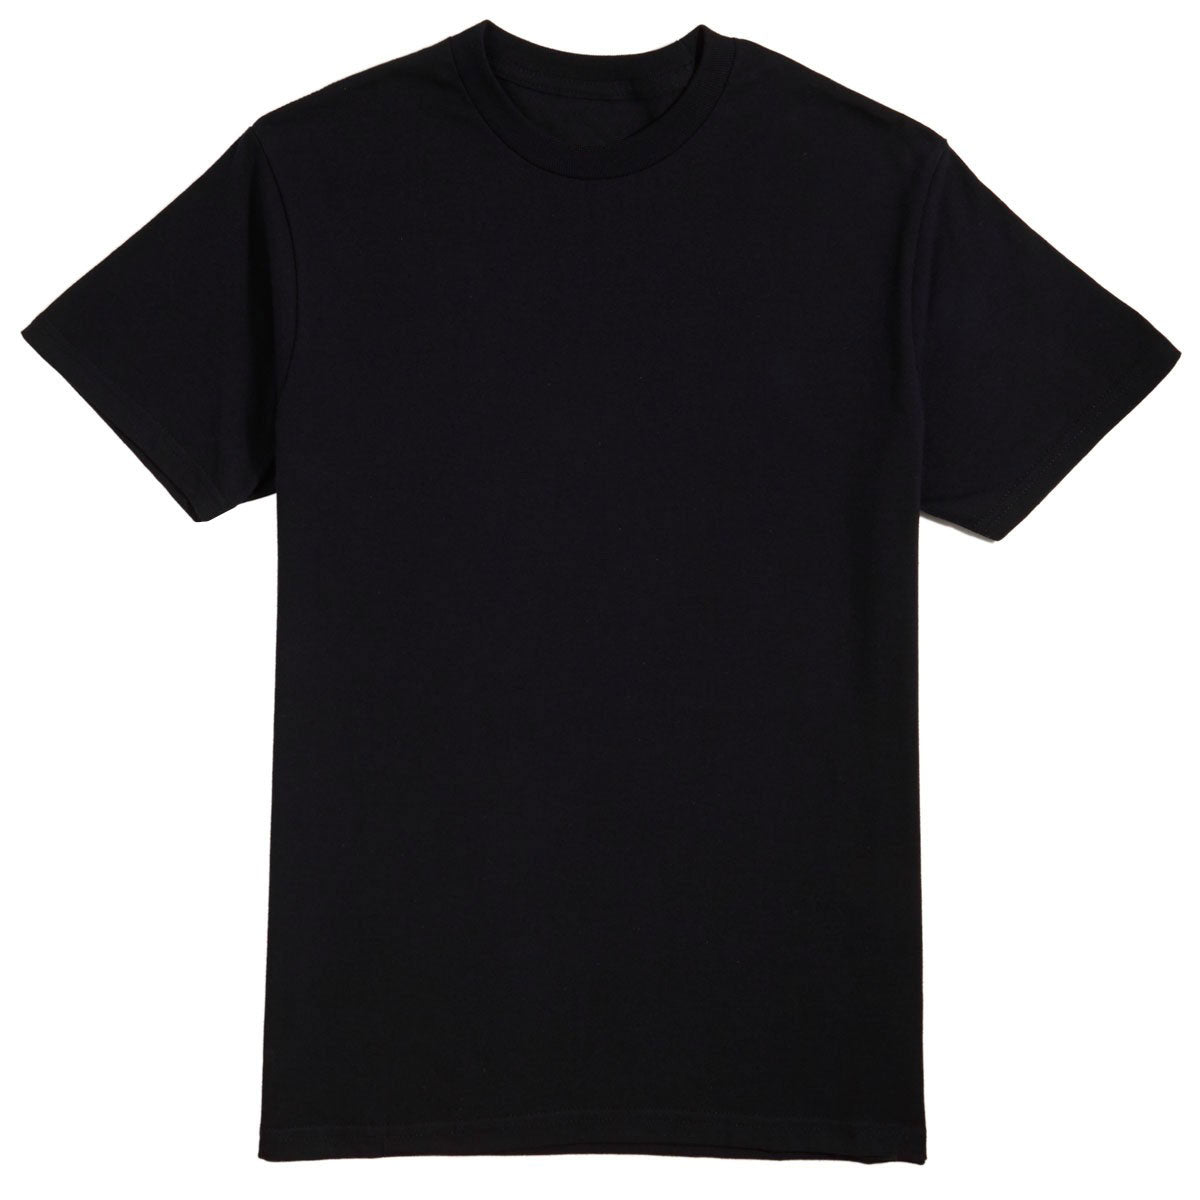 Alien Workshop Spectrum Color-Up T-Shirt - Black - XL image 1